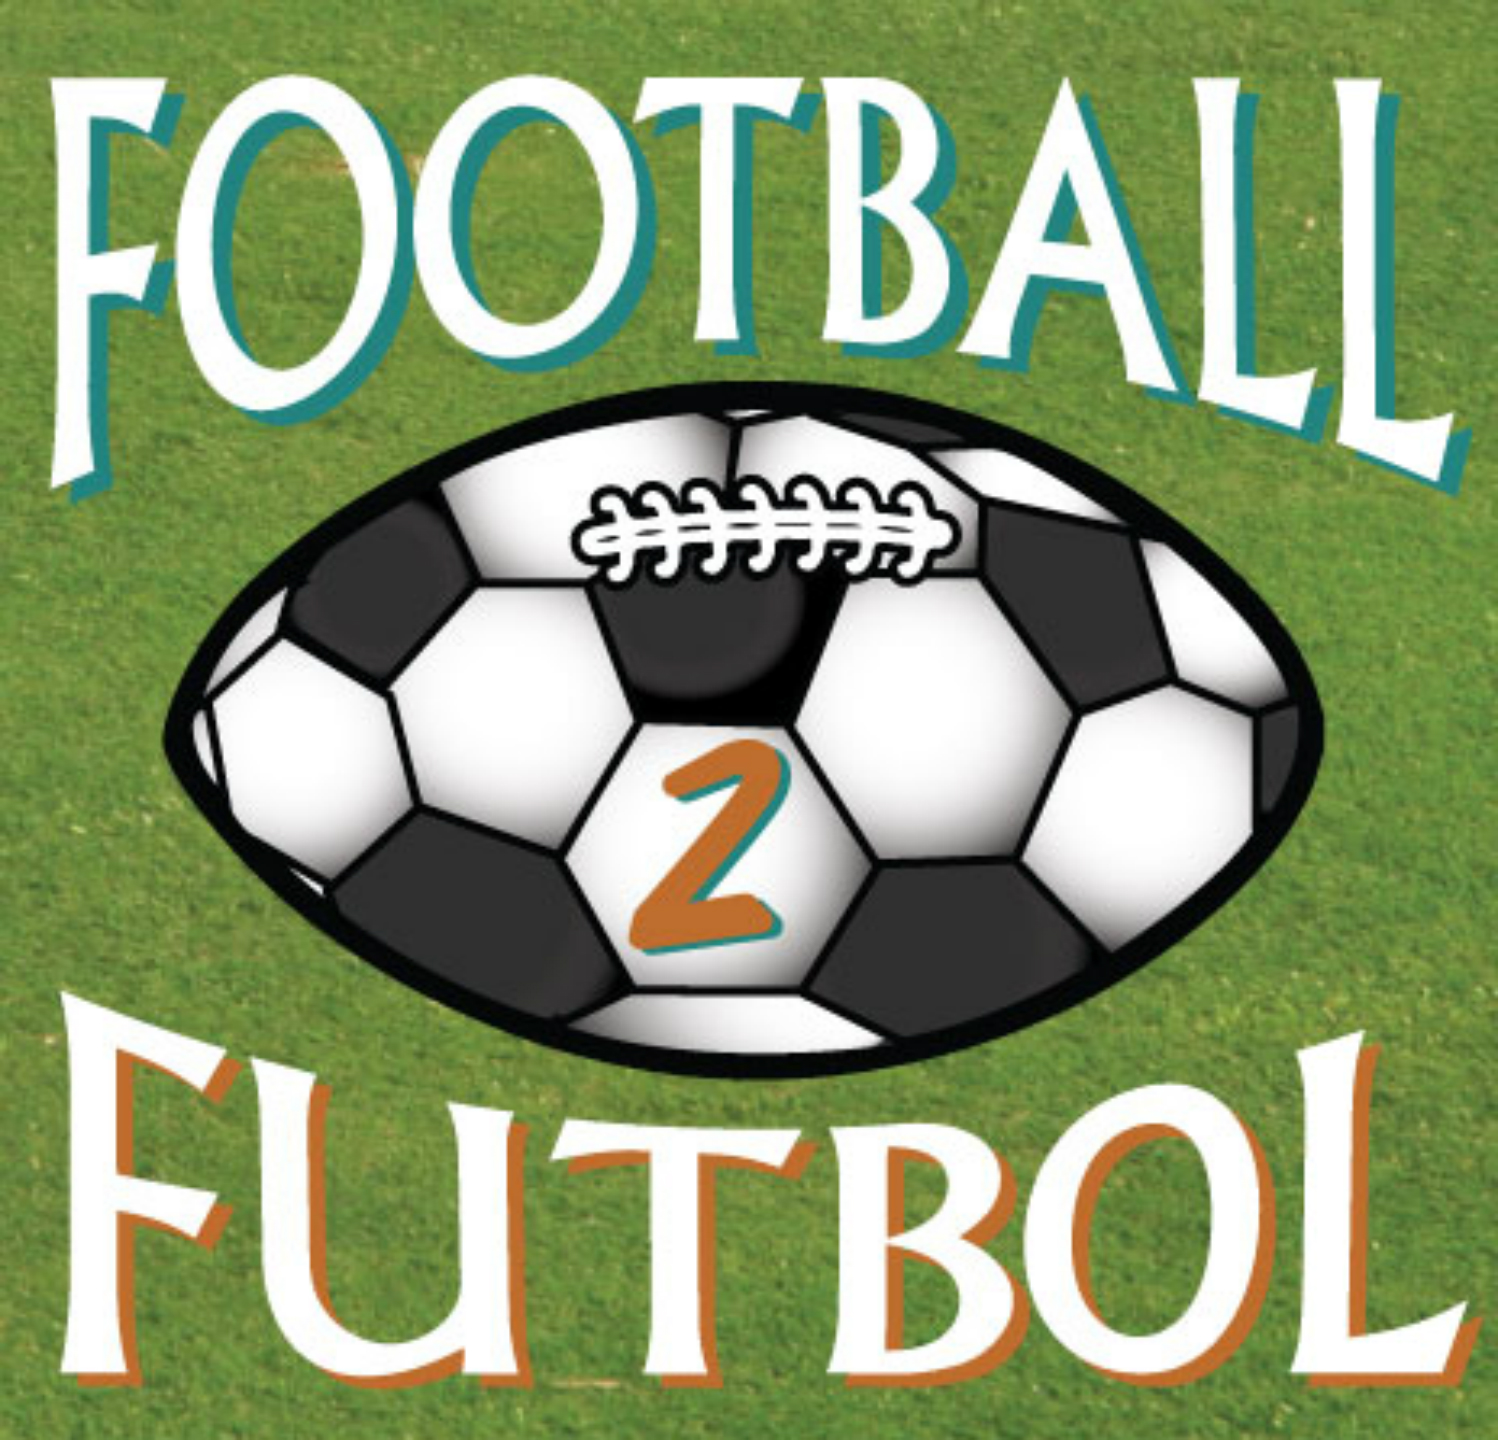 Football 2 Futbol:  NFL Week 13 Recap, Cowboys winning ugly on MNF, & College Football Bowl Games